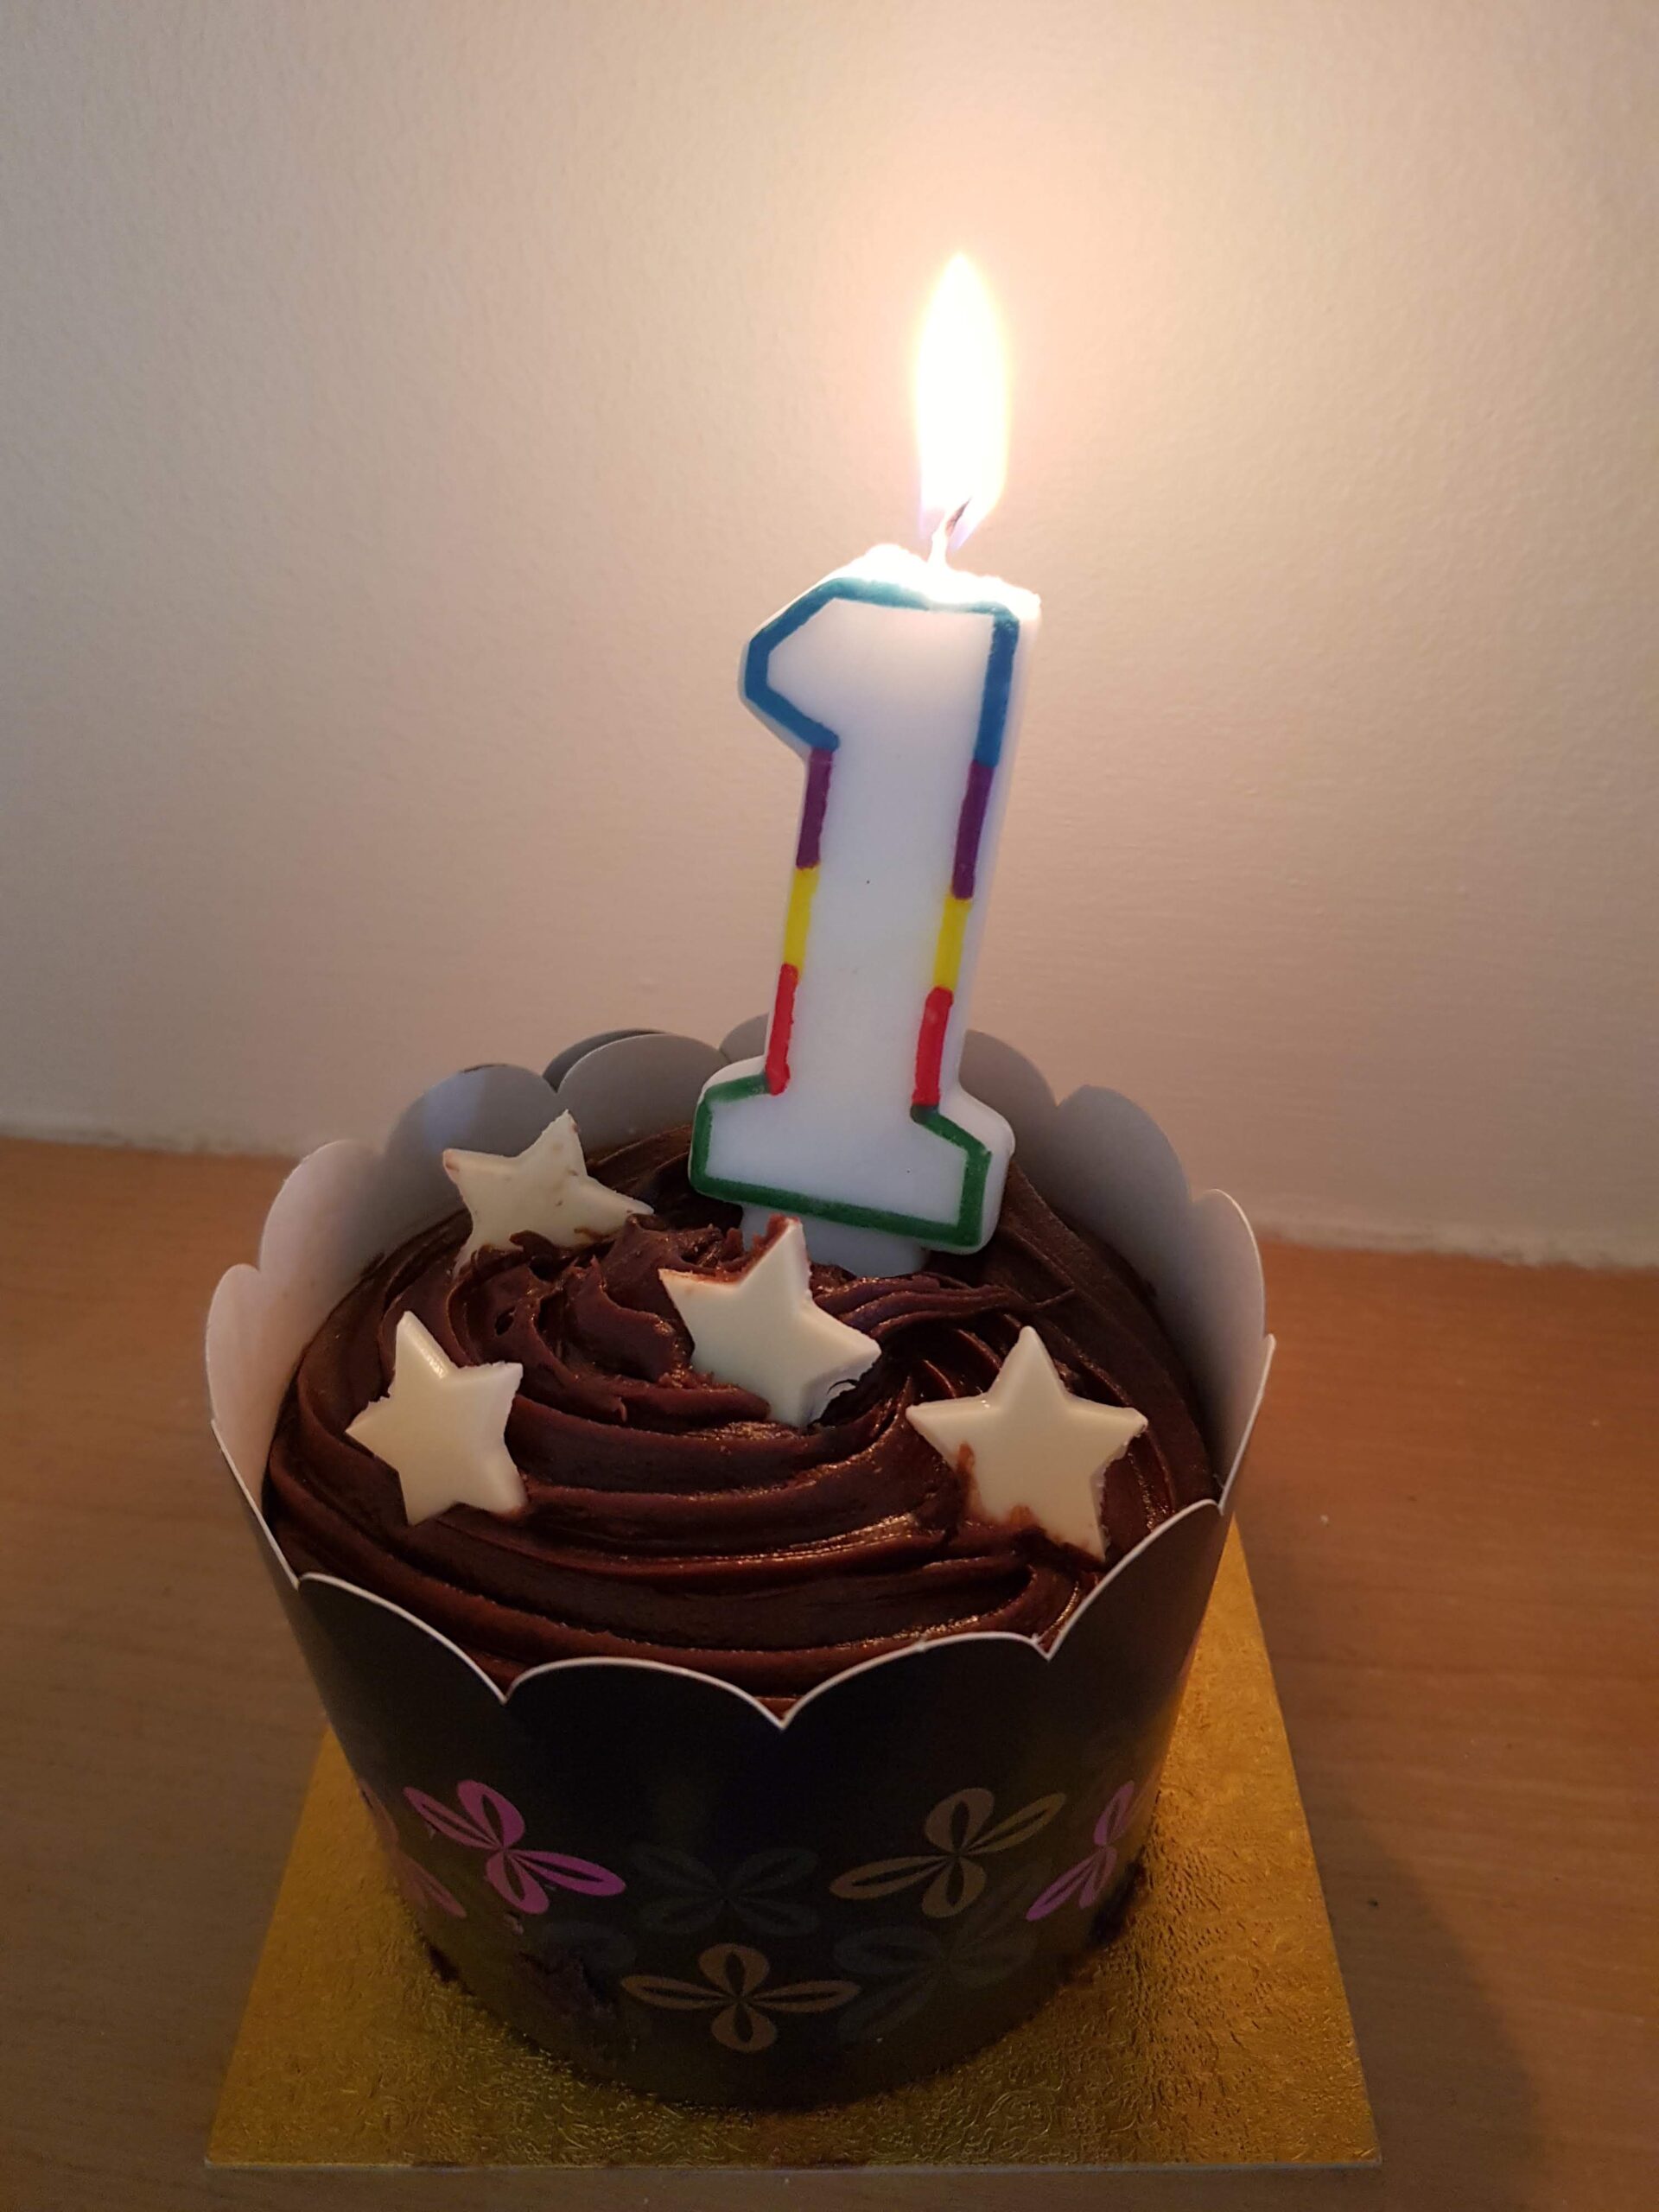 This blogs 1st Birthday